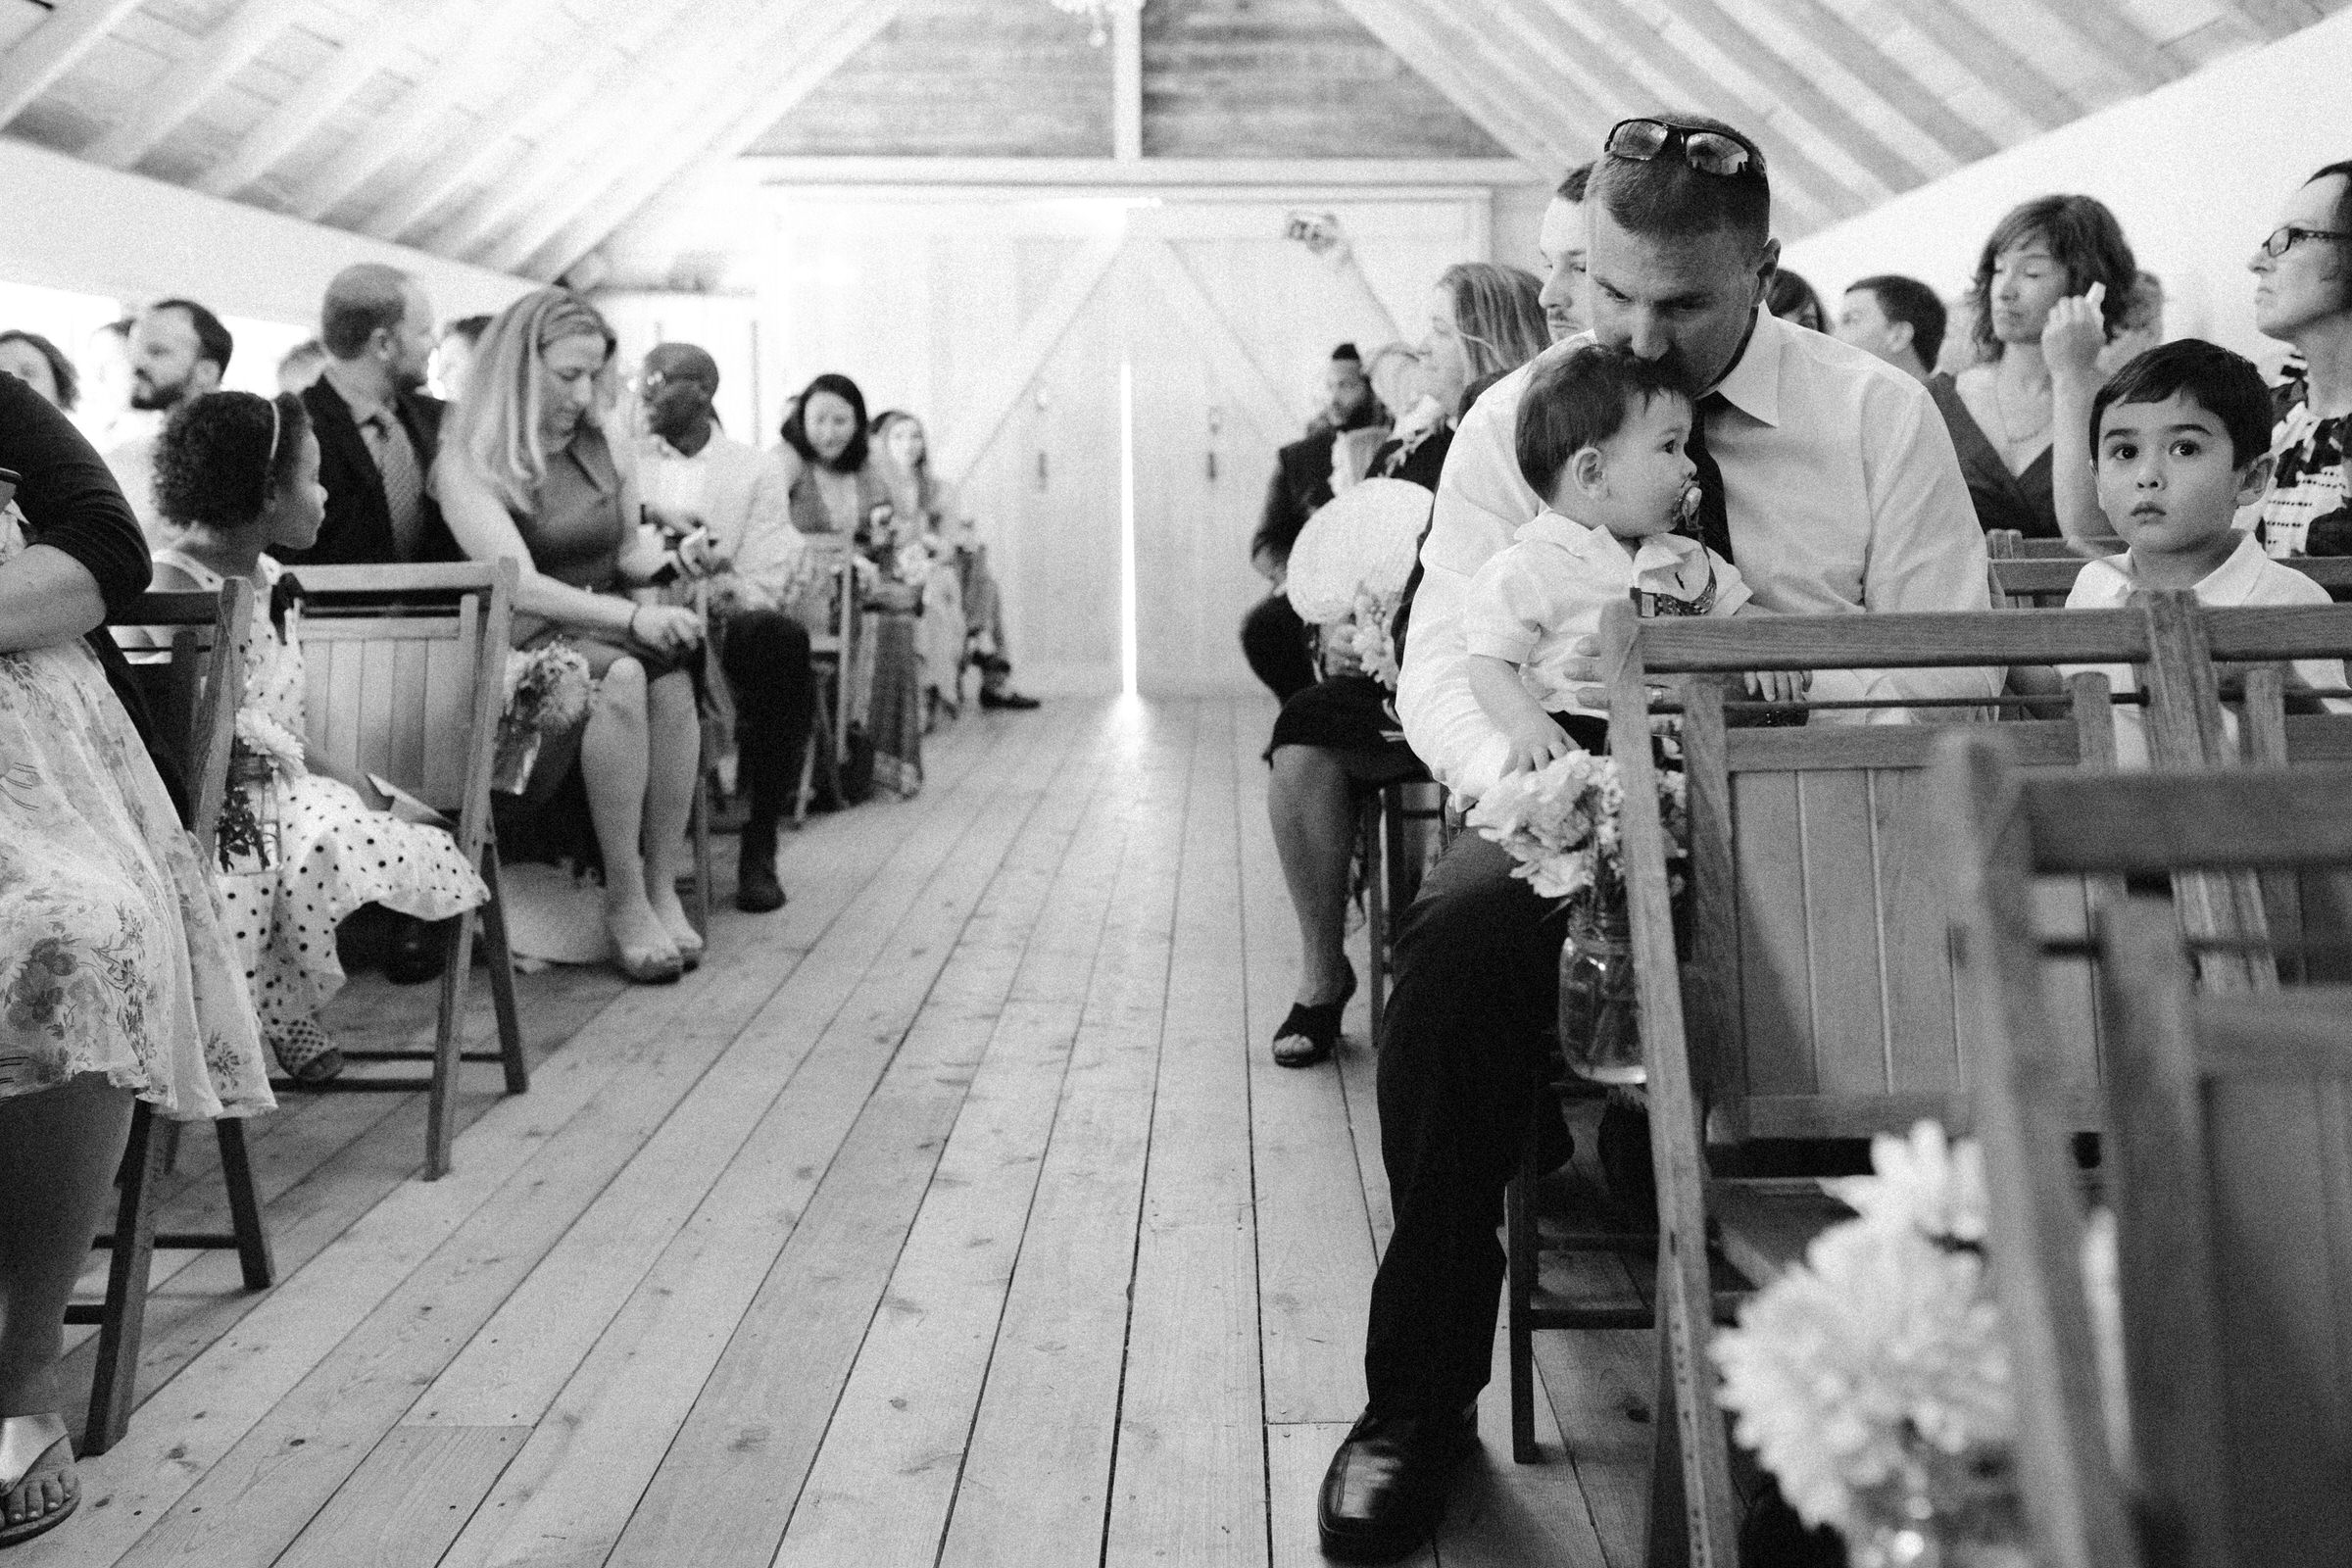 Wayfarer Whidbey Island Wedding: Wedding guests gather at the ceremony barn for Sara and Joe's wedding